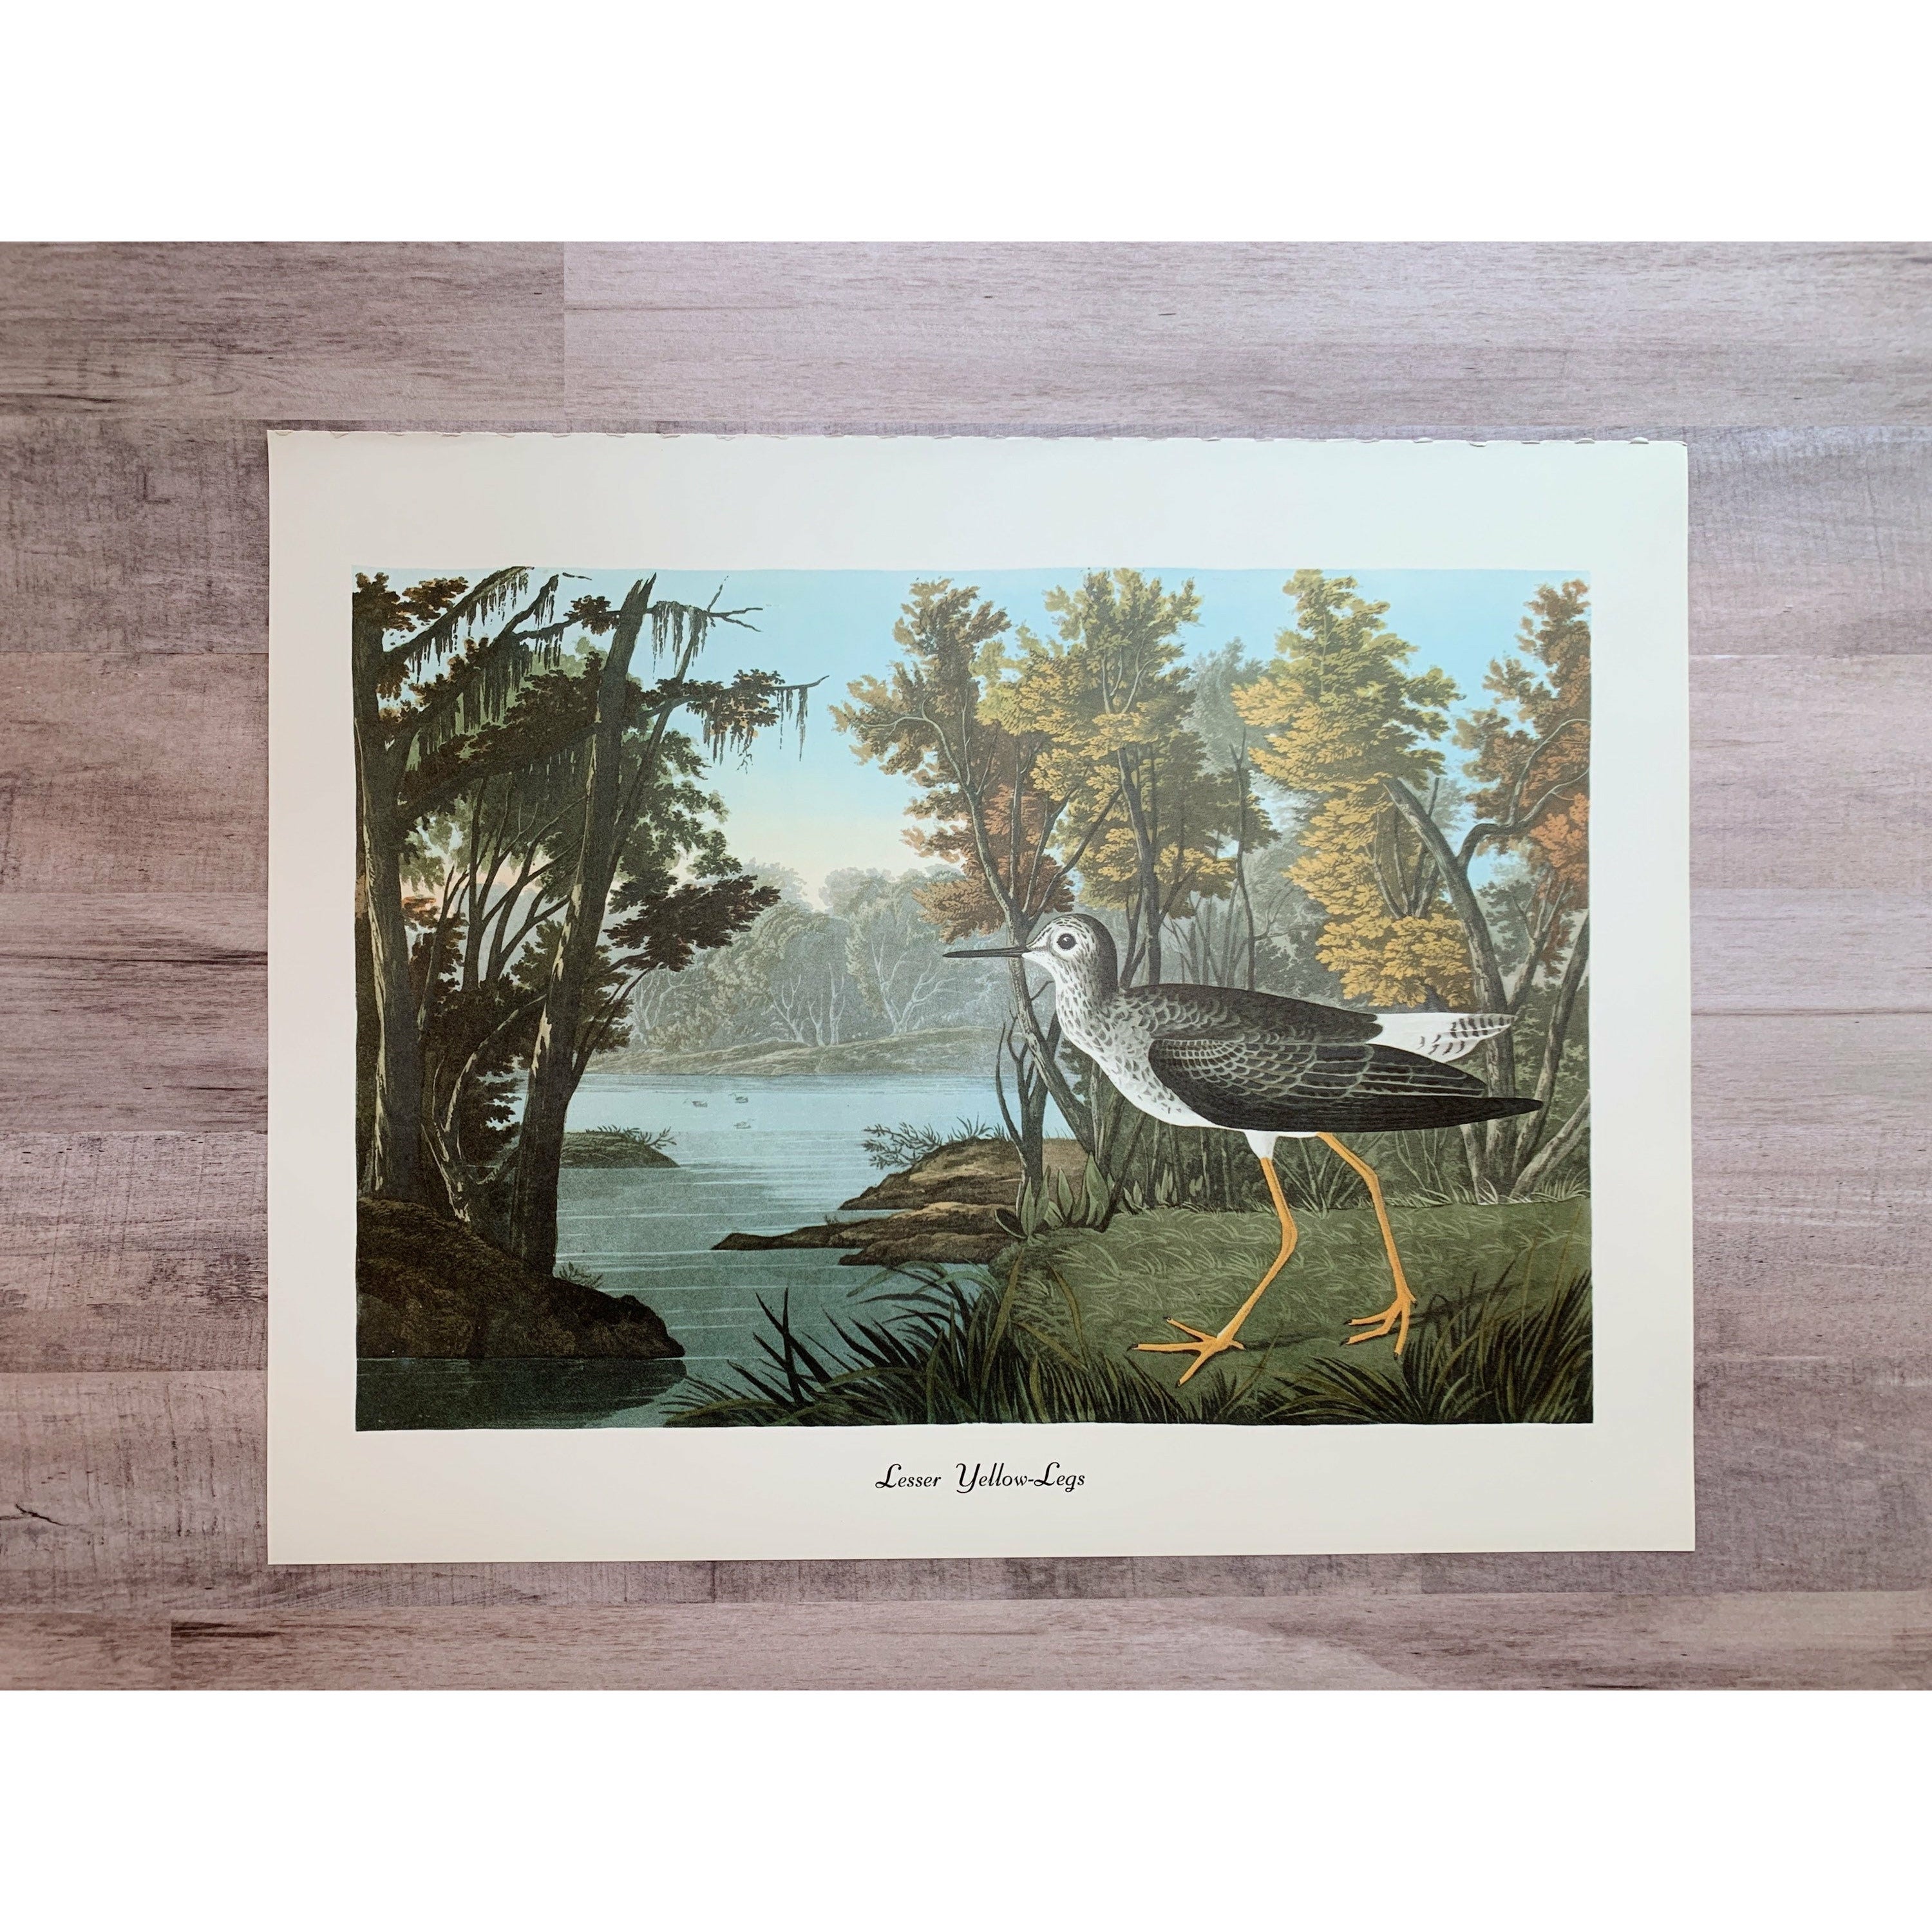 Vintage Audubon Bird Bookplates - Yellow Palm Warbler & Fish Crow - Jo – In  The Vintage Kitchen Shop